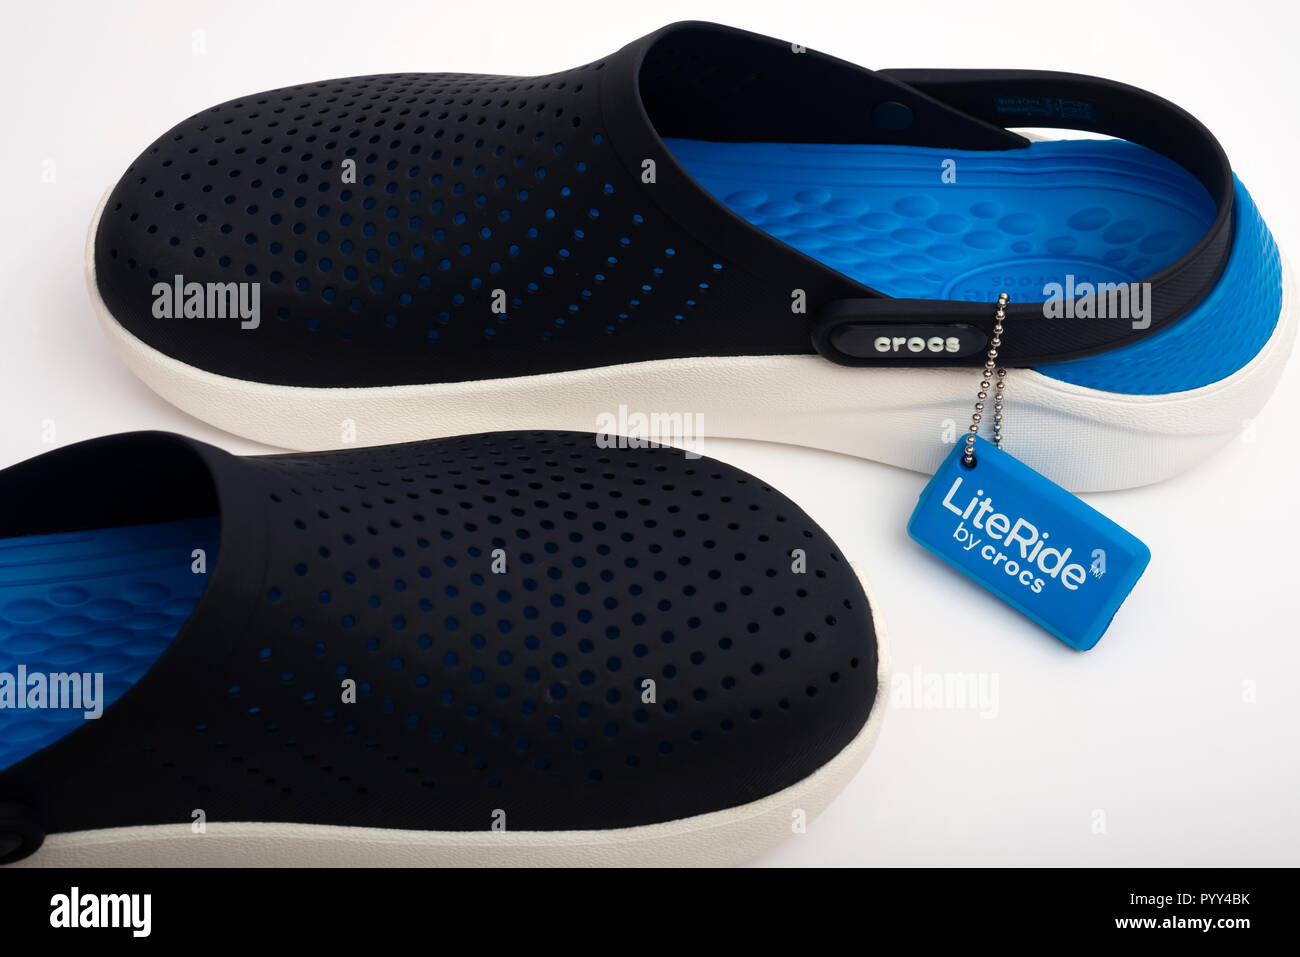 crocs rubber slippers